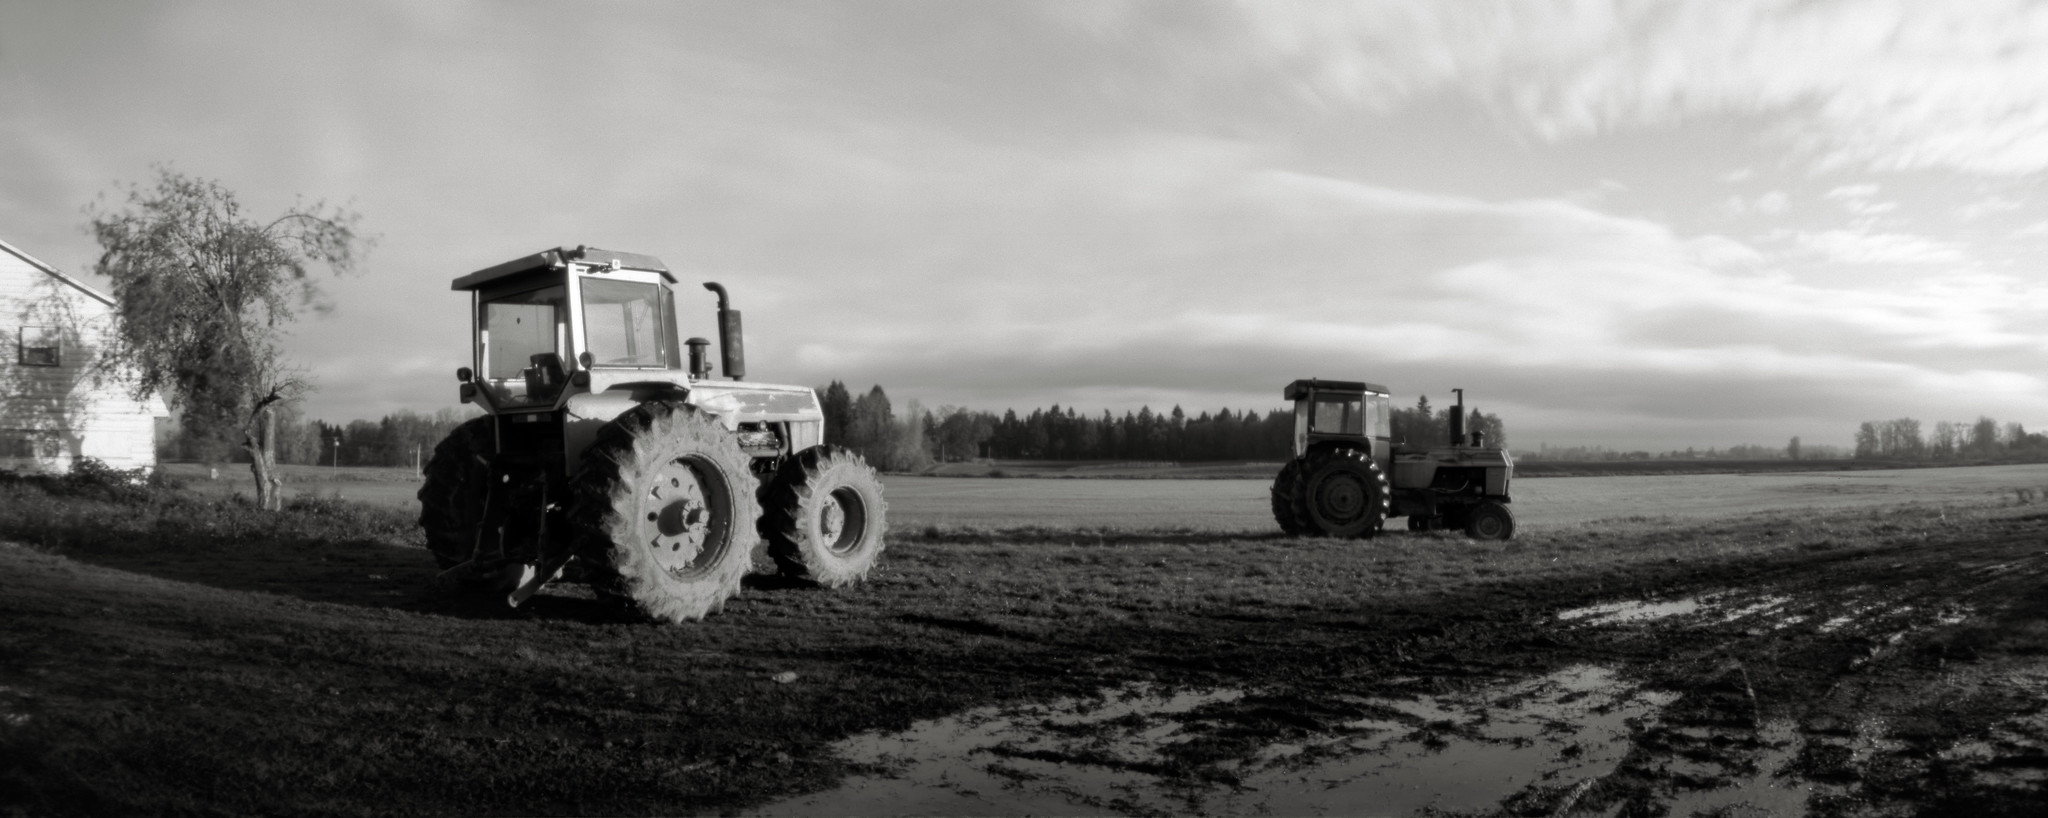 Tractors, Sauvie Island, Oregon 